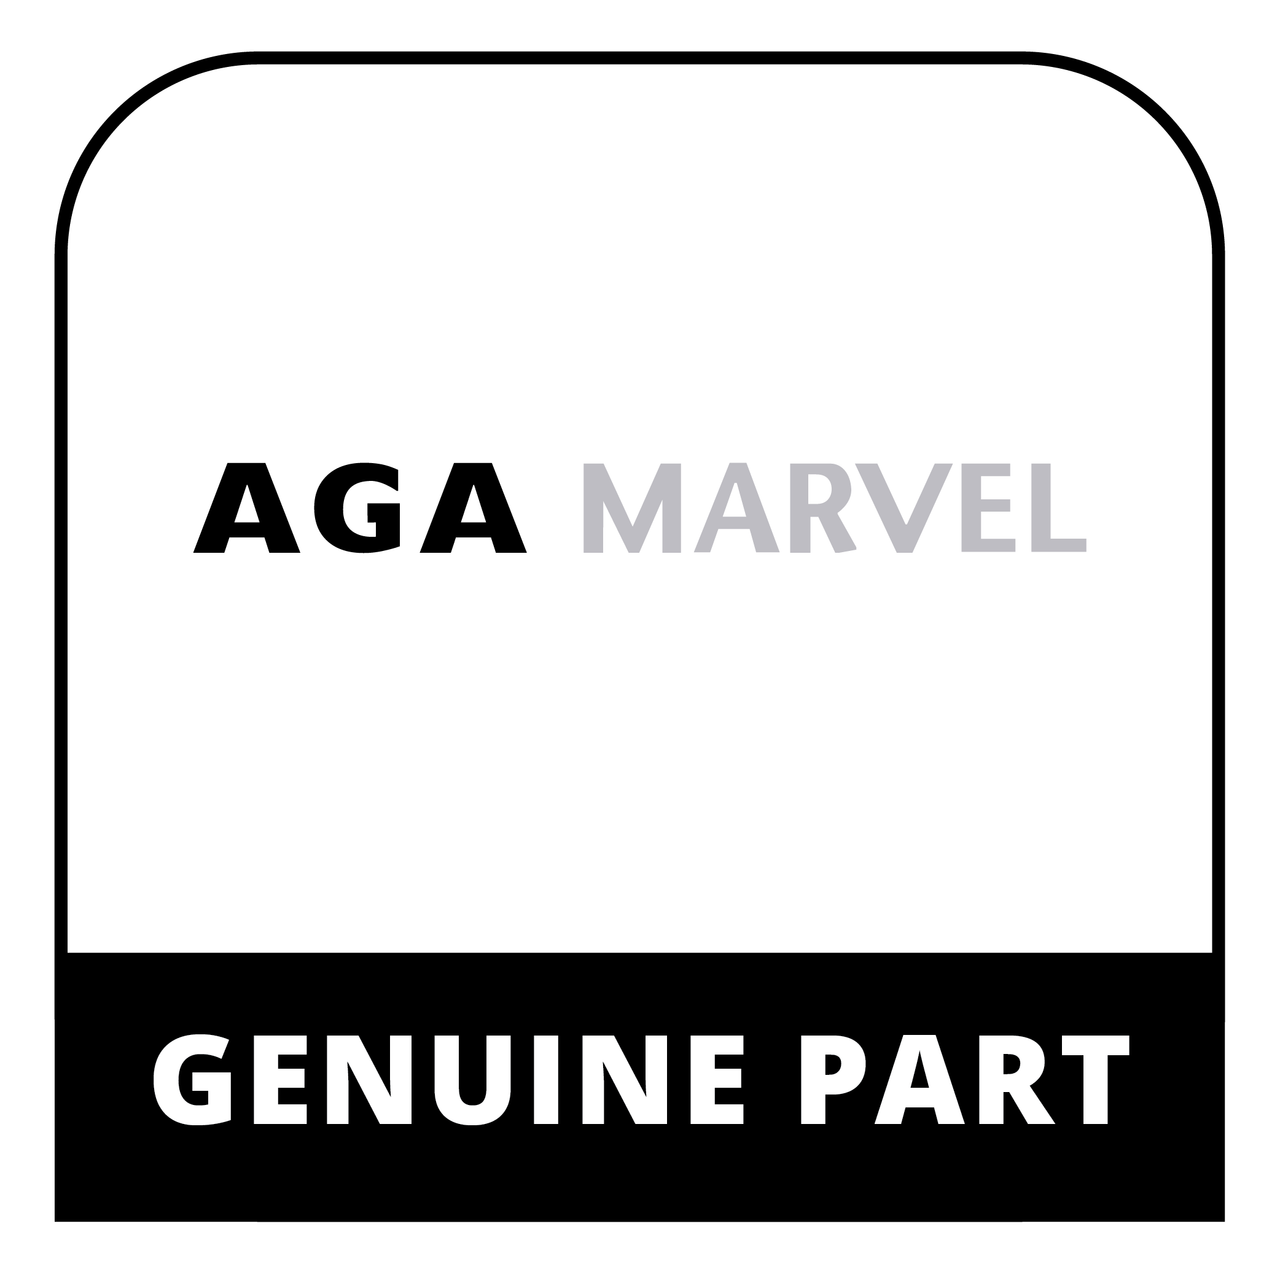 AGA Marvel S31280-MBL - D/A-Refrig Mercury Lh-Mbl - Genuine AGA Marvel Part